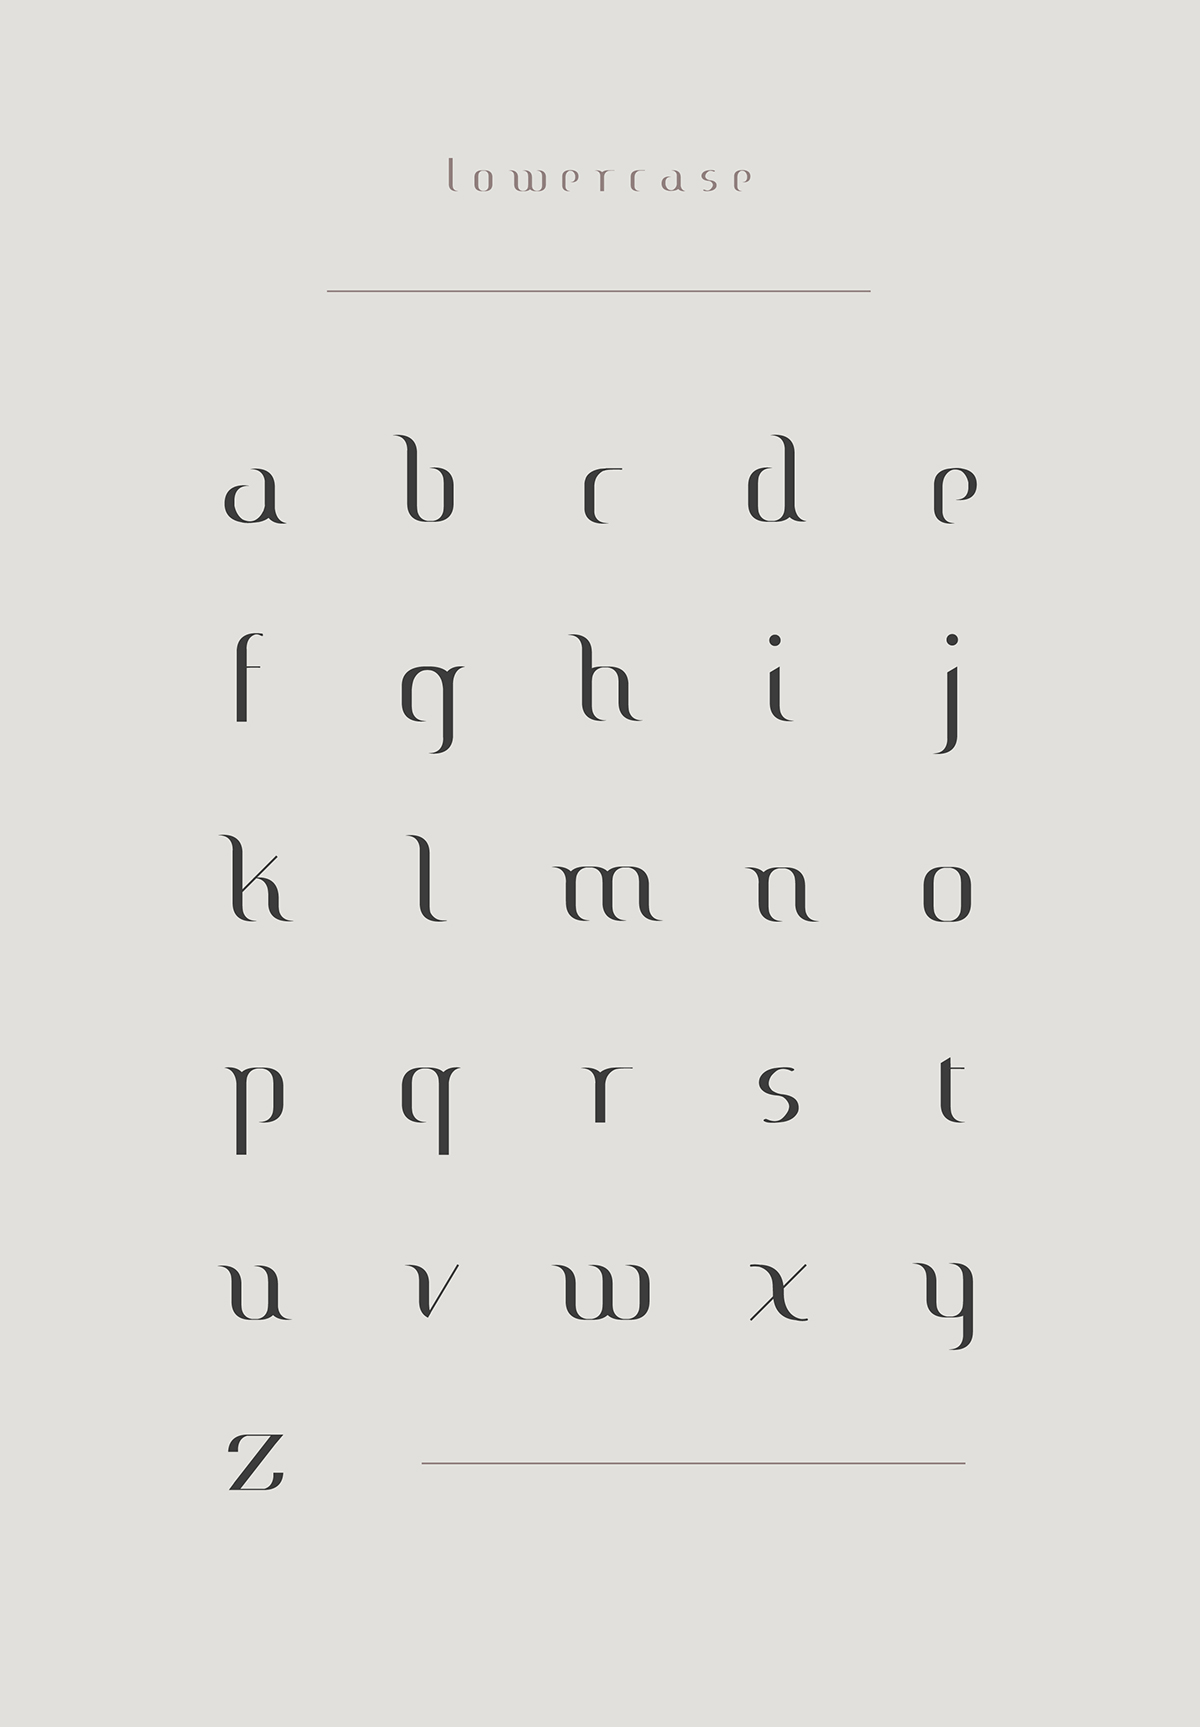 typefont typeset bali indonesia culture modern traditional type font free Typeface design dancer dewi